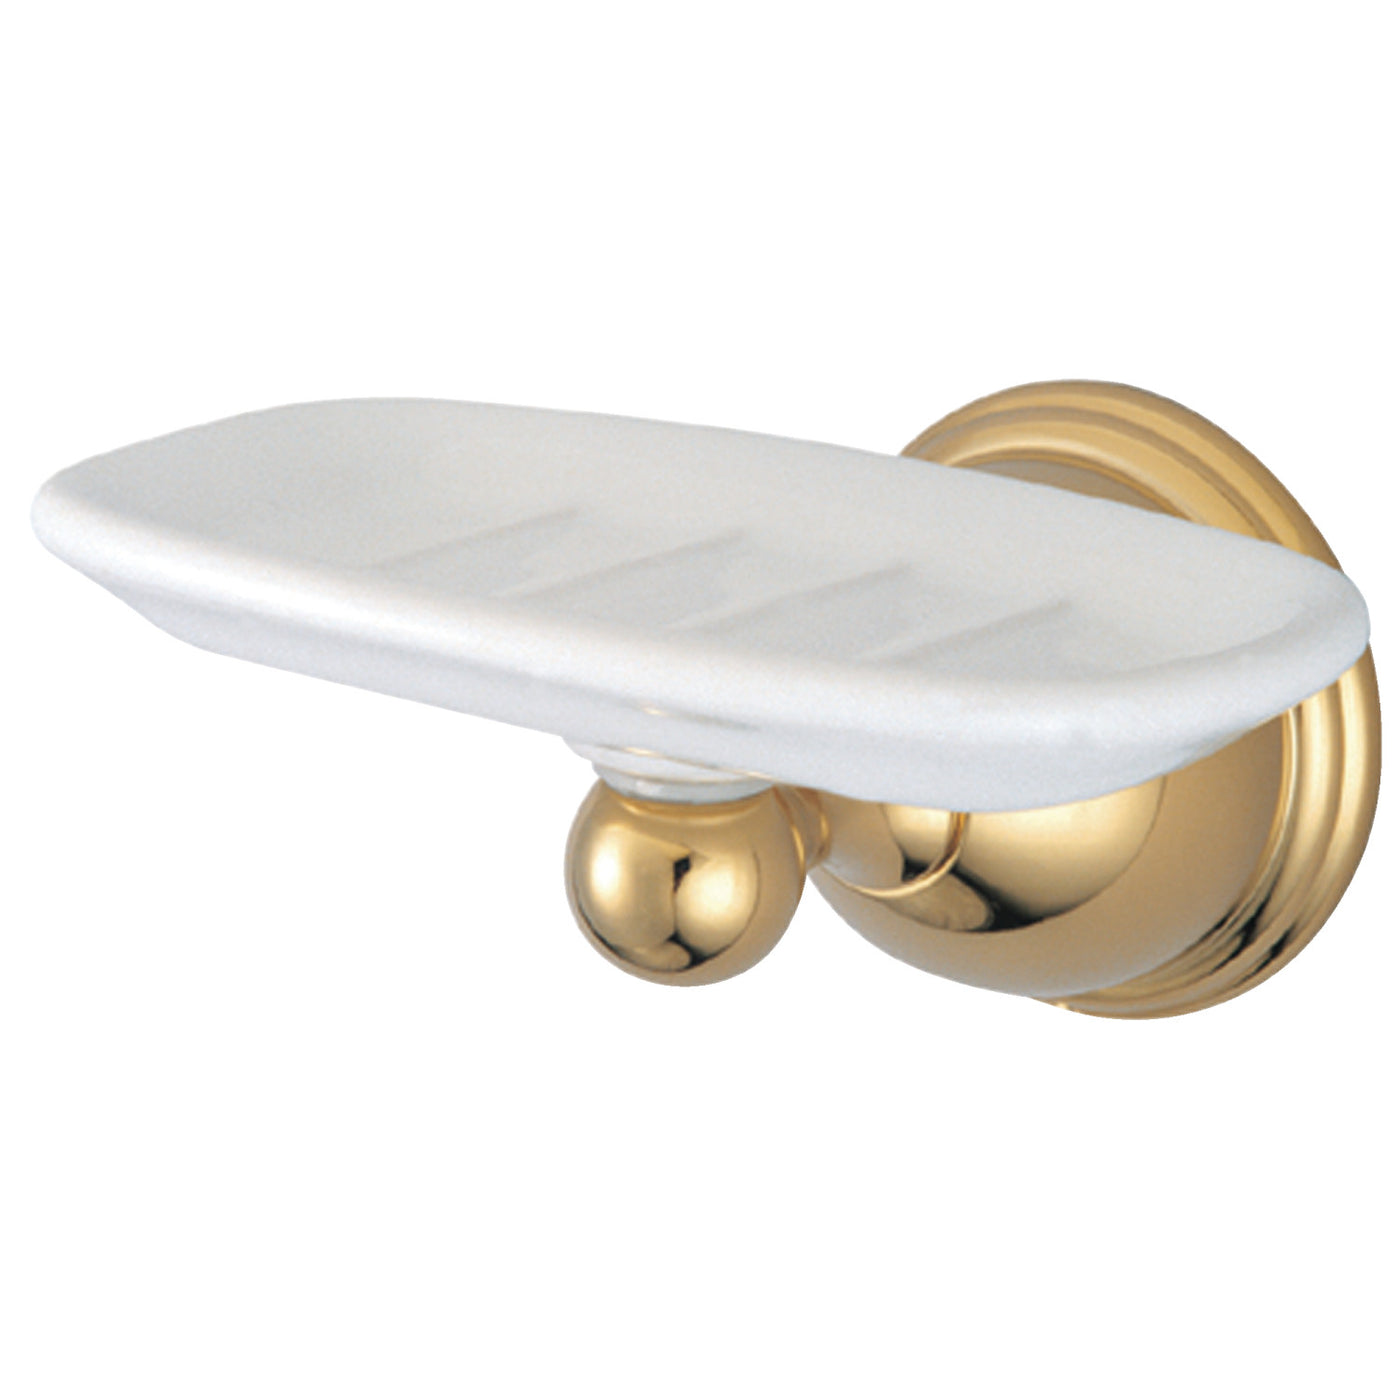 Elements of Design EBA3965PB Wall-Mount Soap Dish Holder, Polished Brass